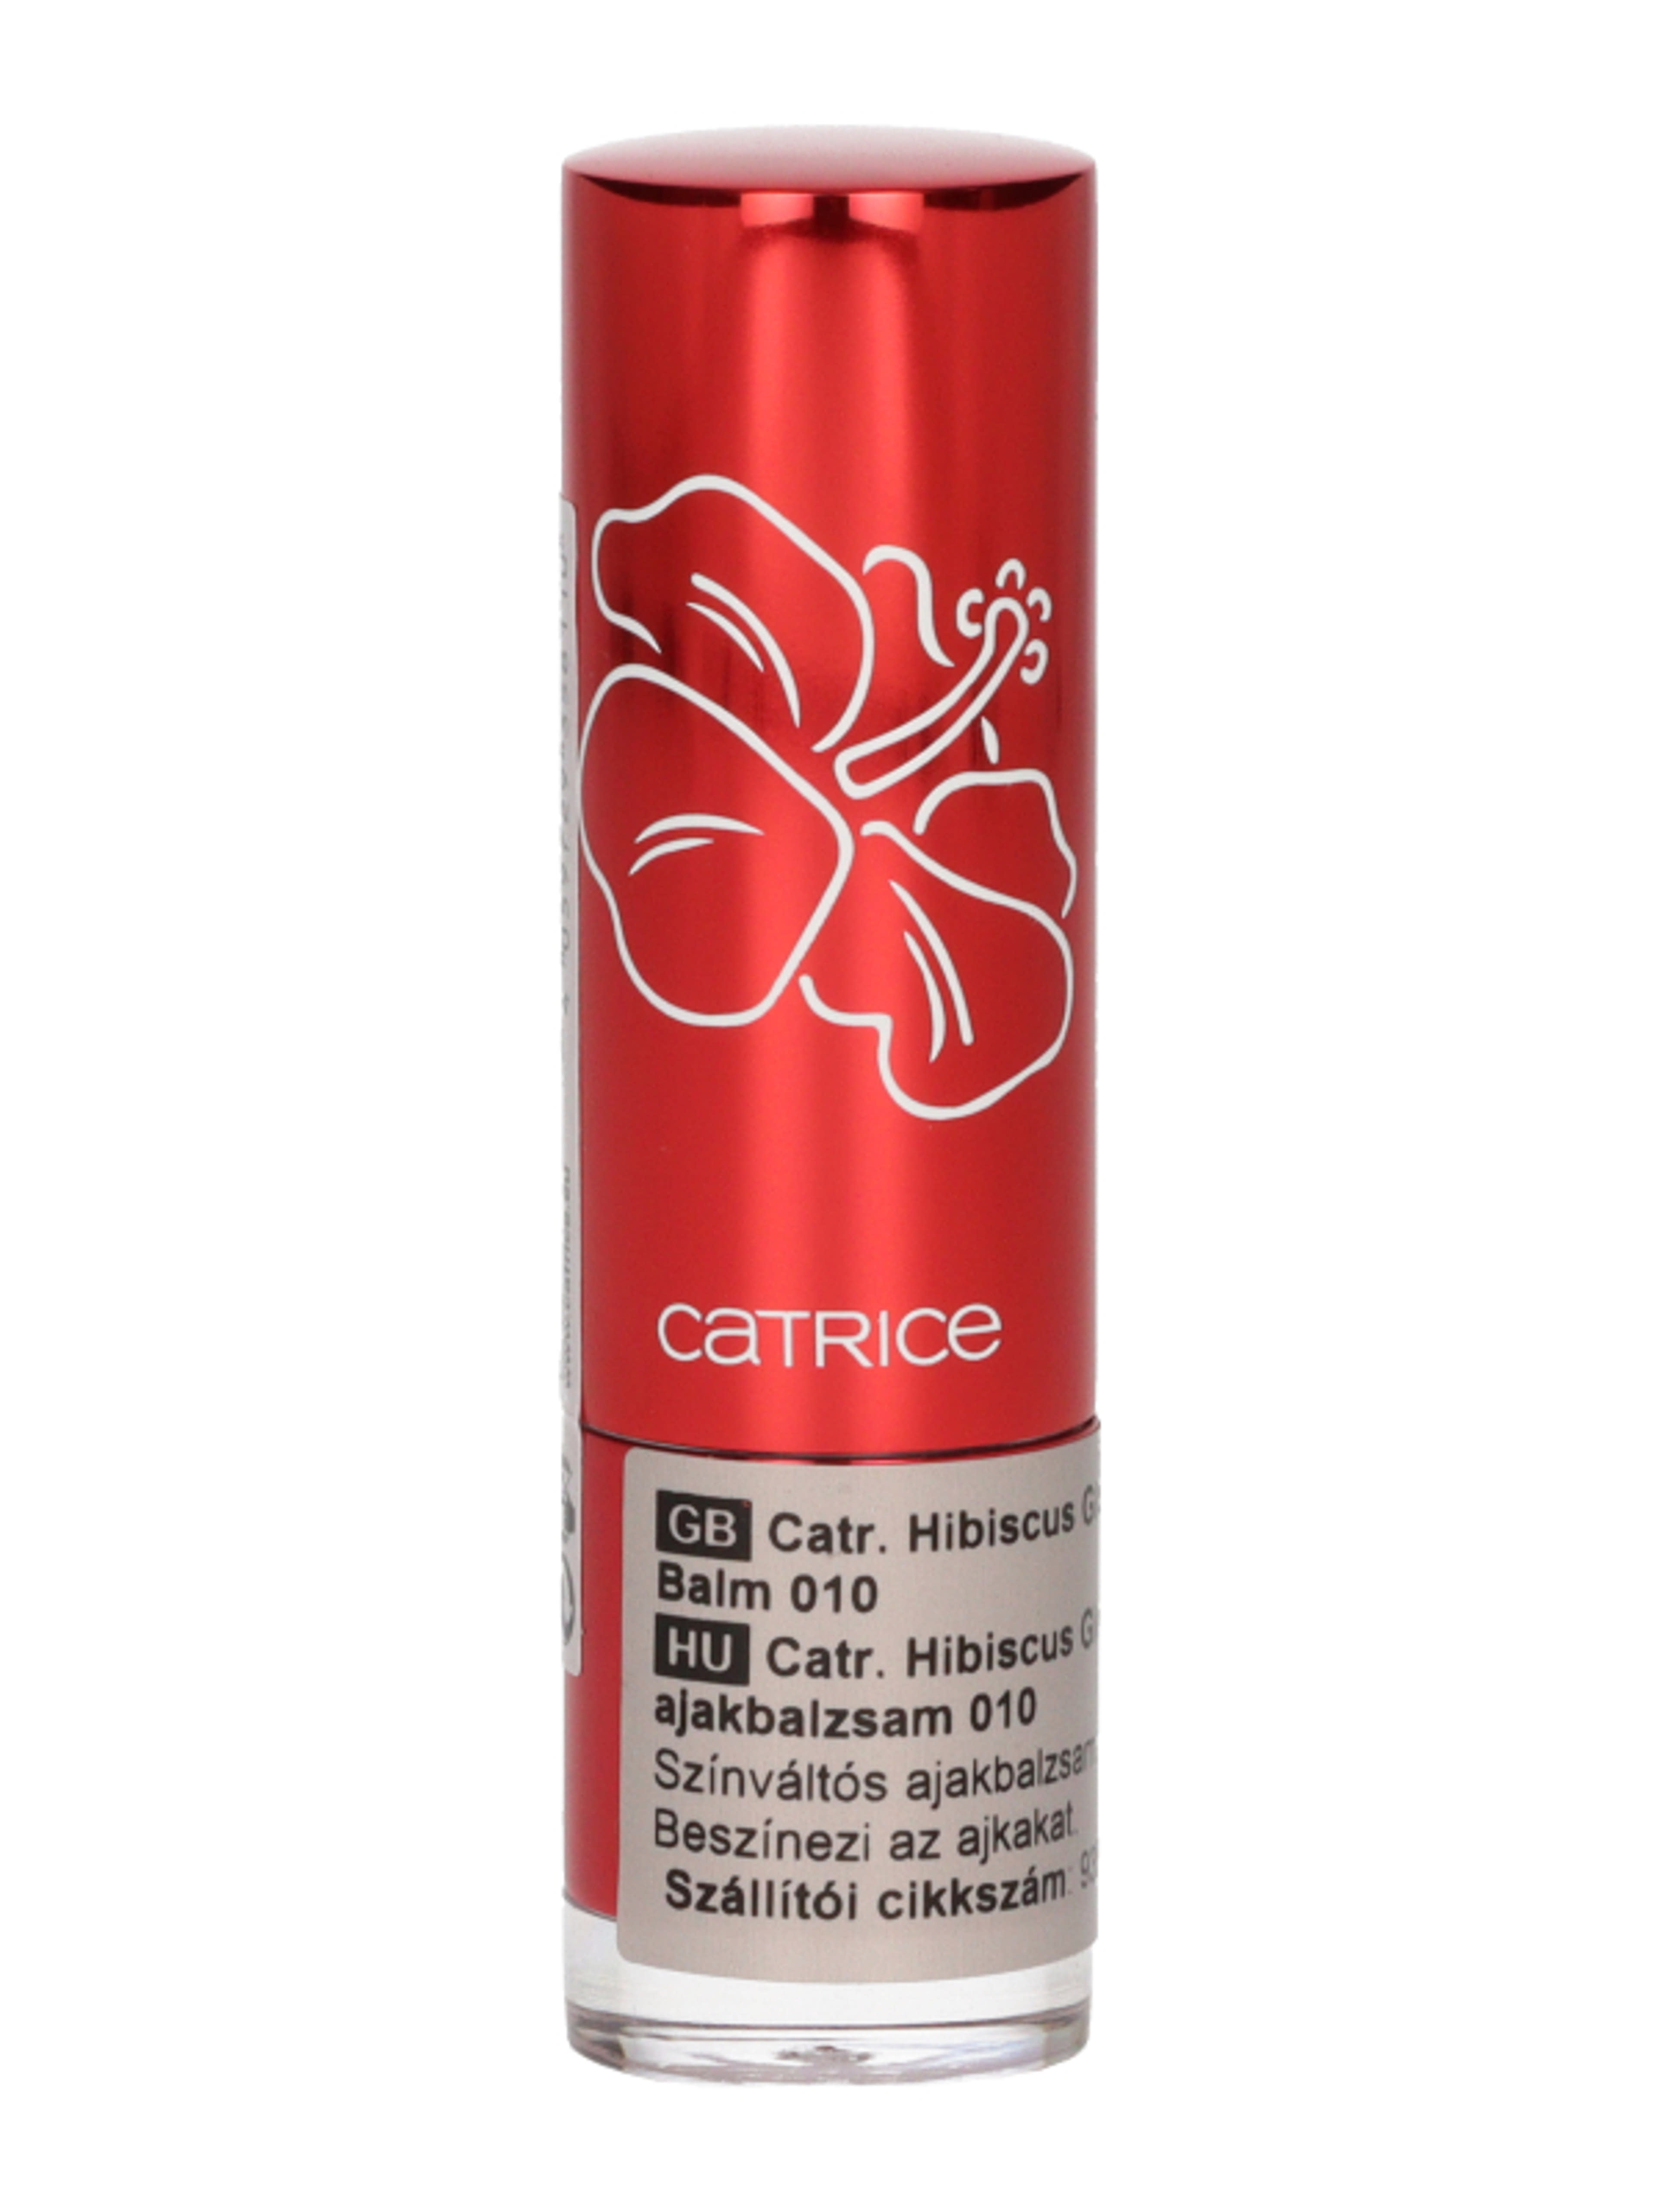 Catrice Wild Hibiscus Glow ajakbalzsam /010 - 1 db-3